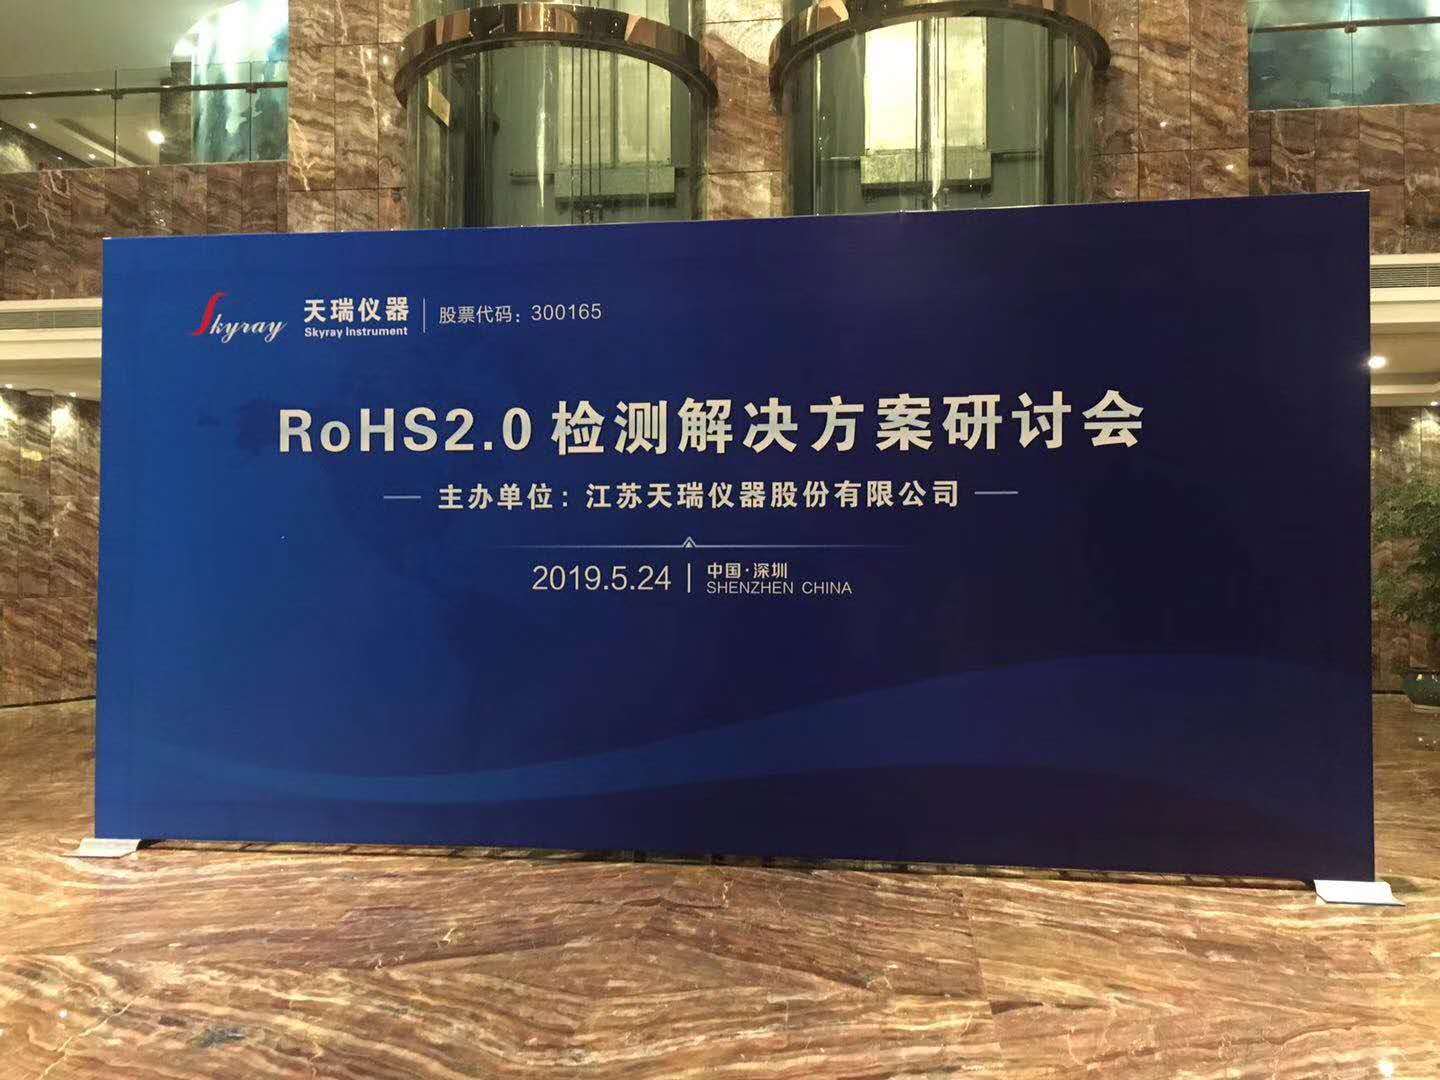 ROHS2.0十项环保仪器价格